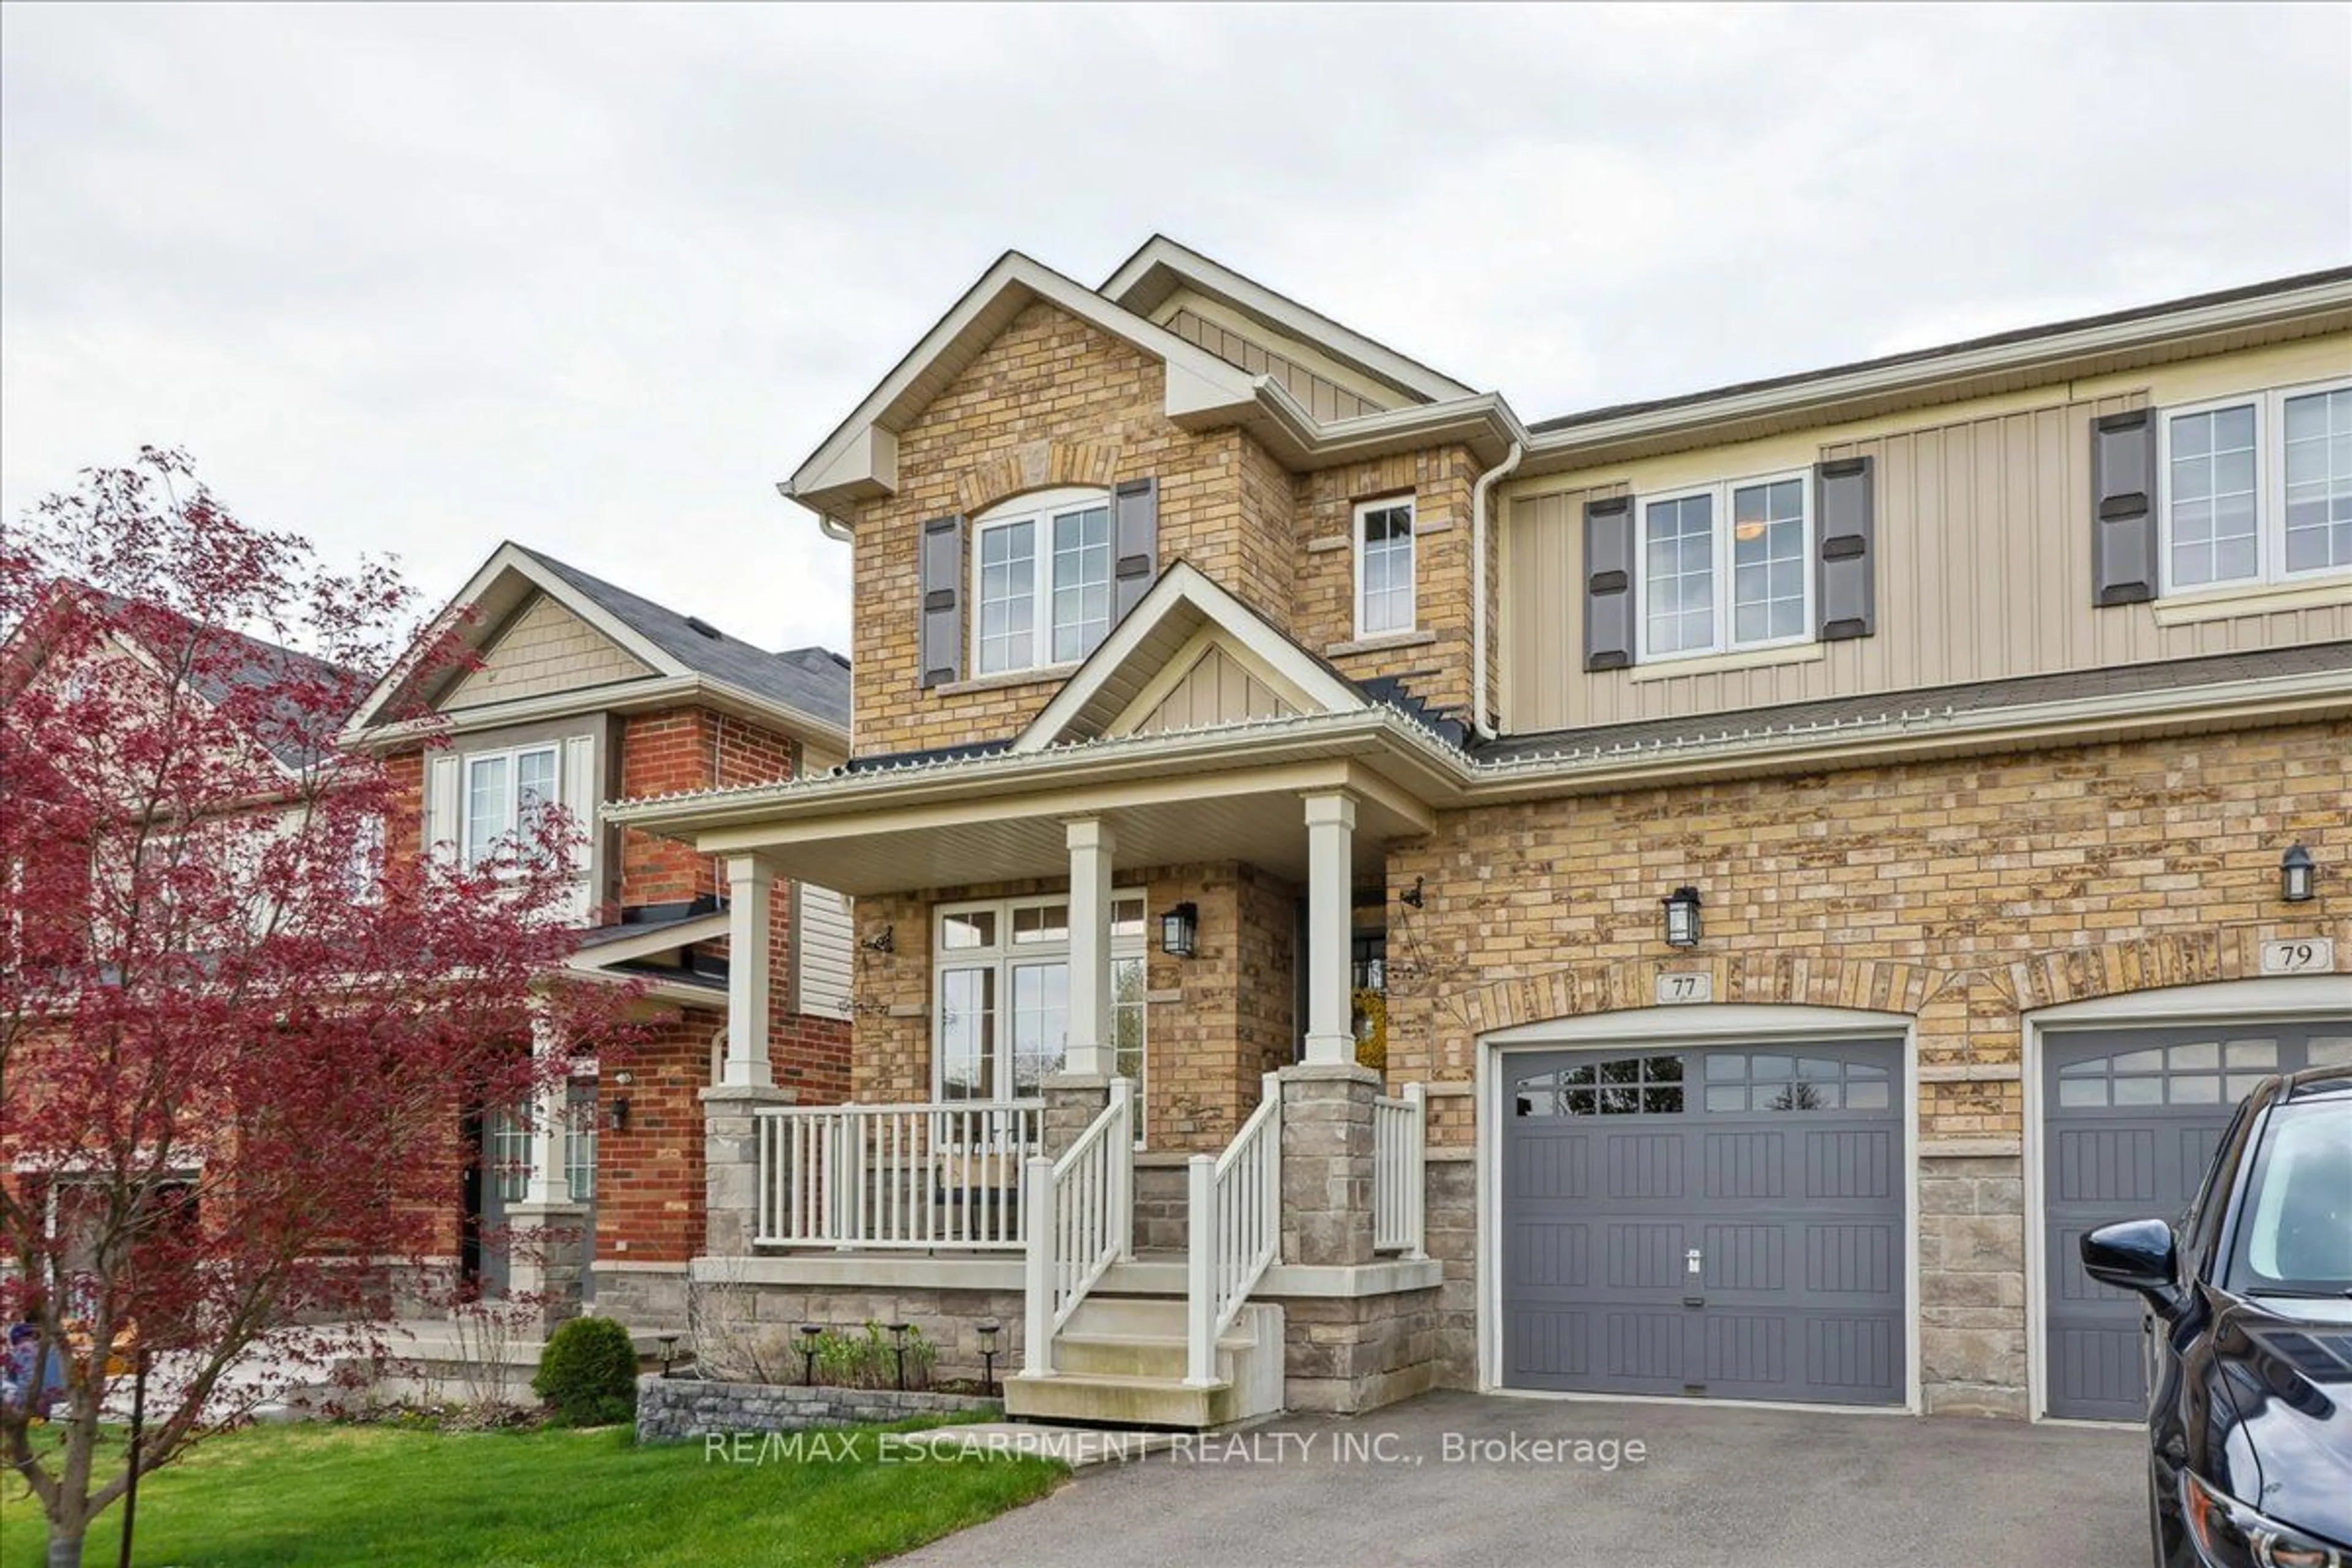 Home with brick exterior material for 77 Sadielou Blvd, Hamilton Ontario L0R 2H1